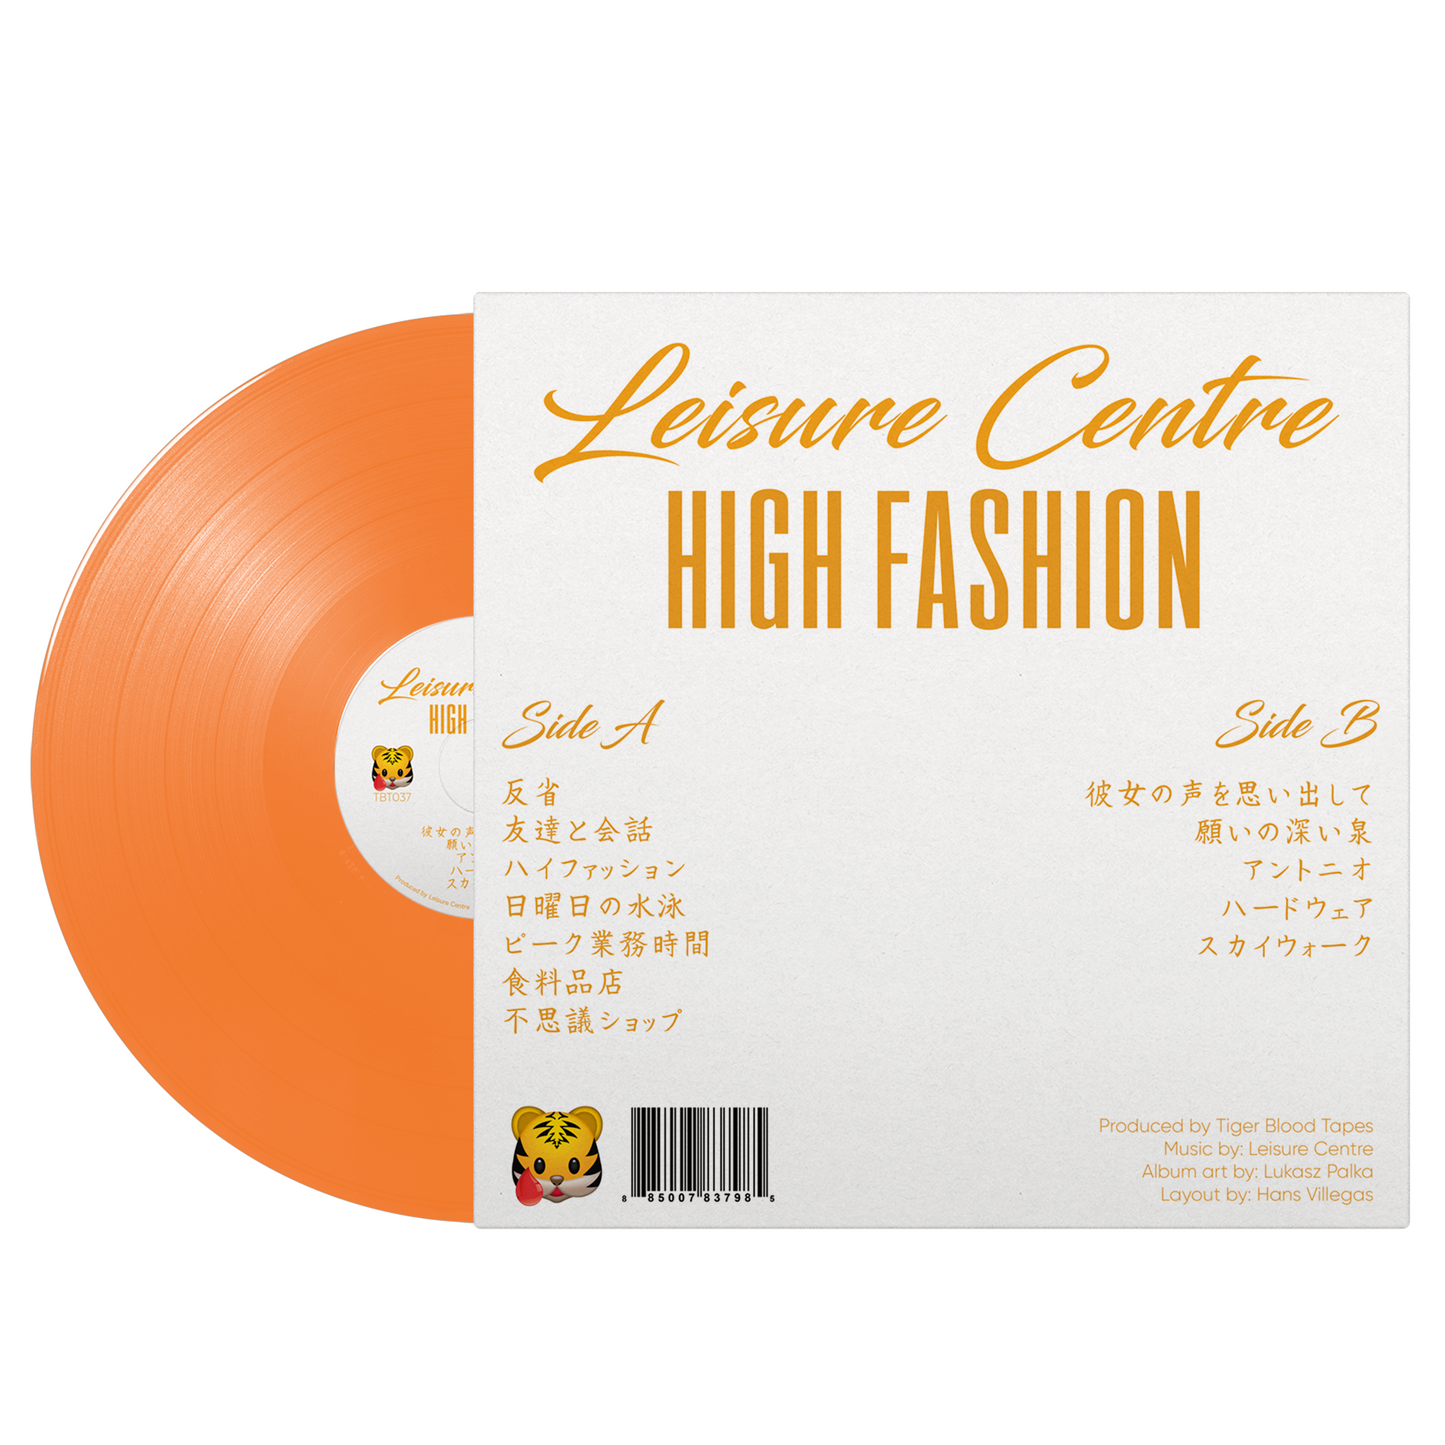 Leisure Centre - "High Fashion" Limited Edition Orange 12" Vinyl LP